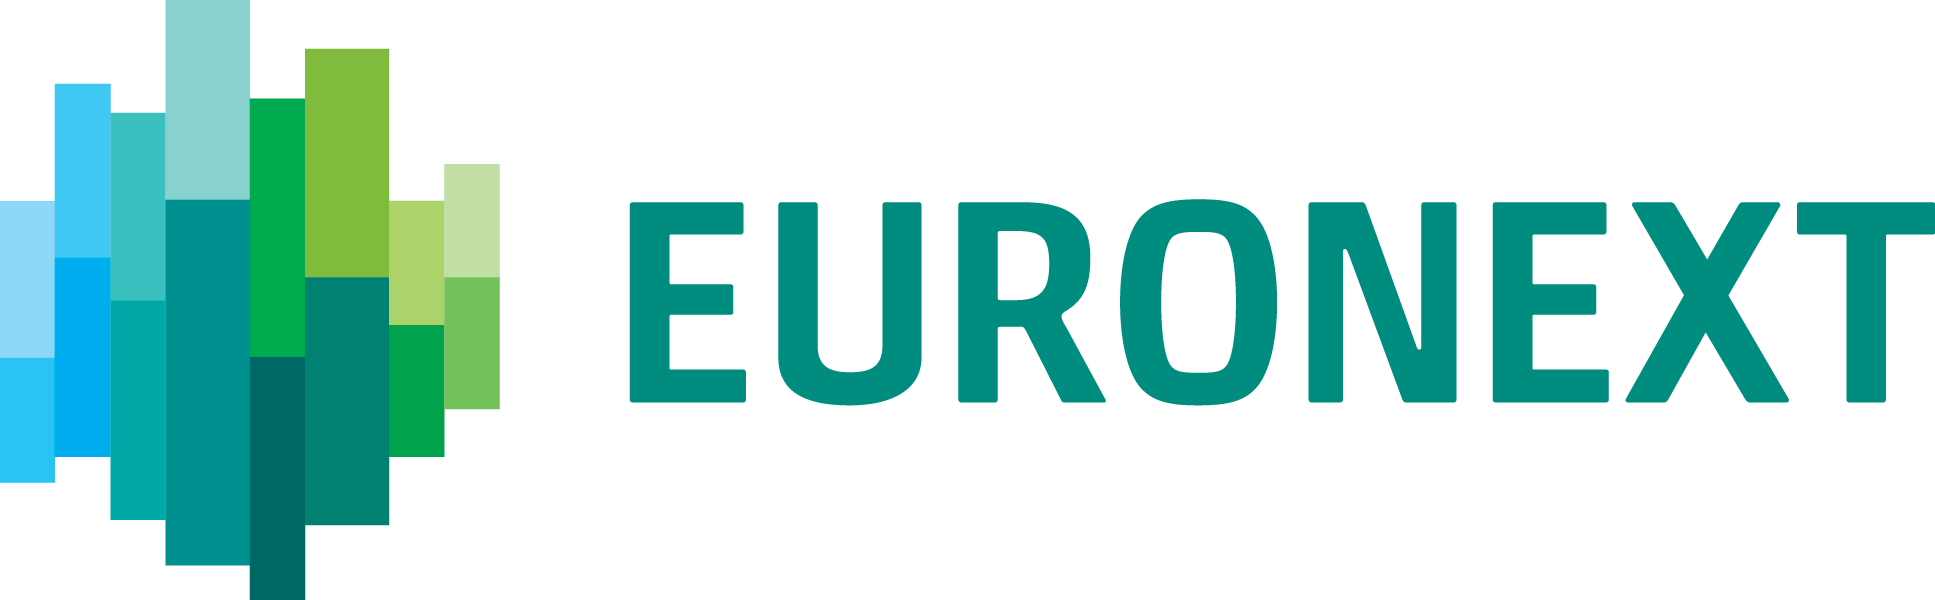 Euronext logo.png